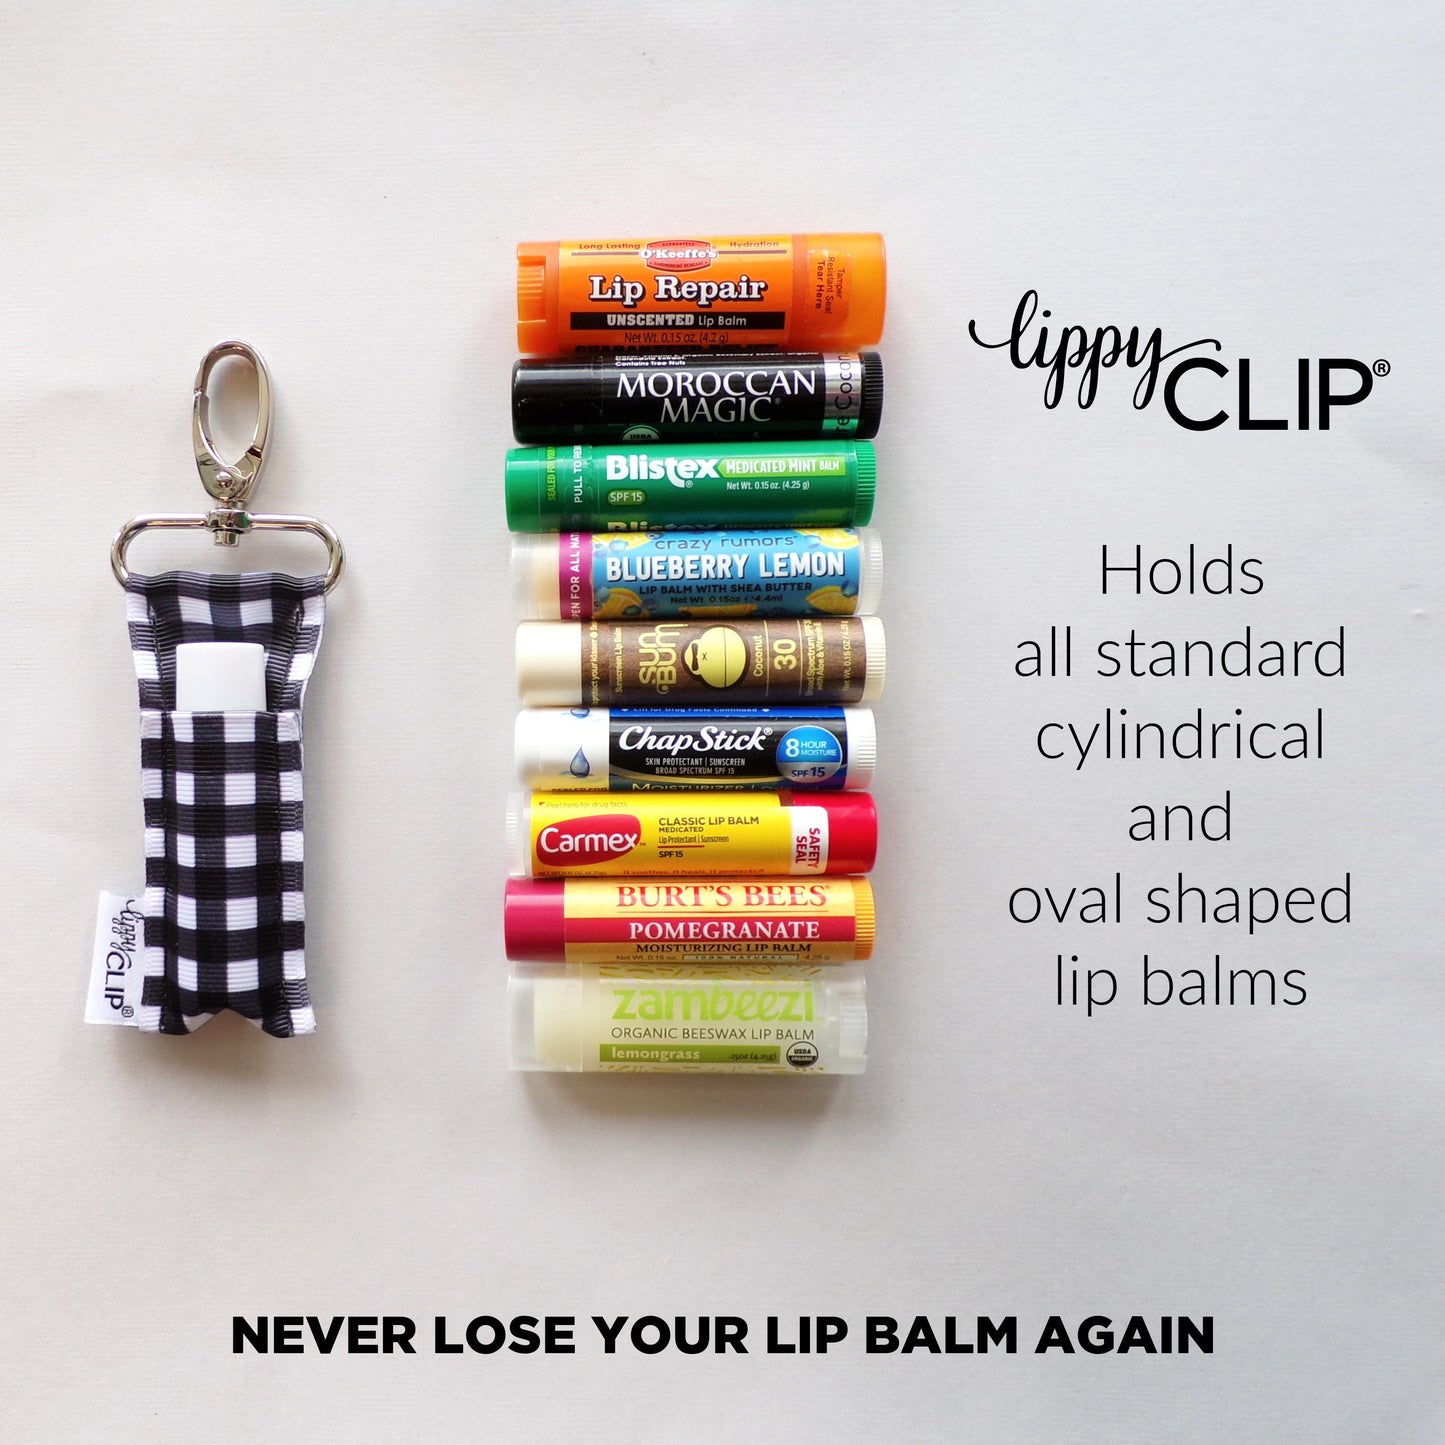 Dino LippyClip® Lip Balm Holder